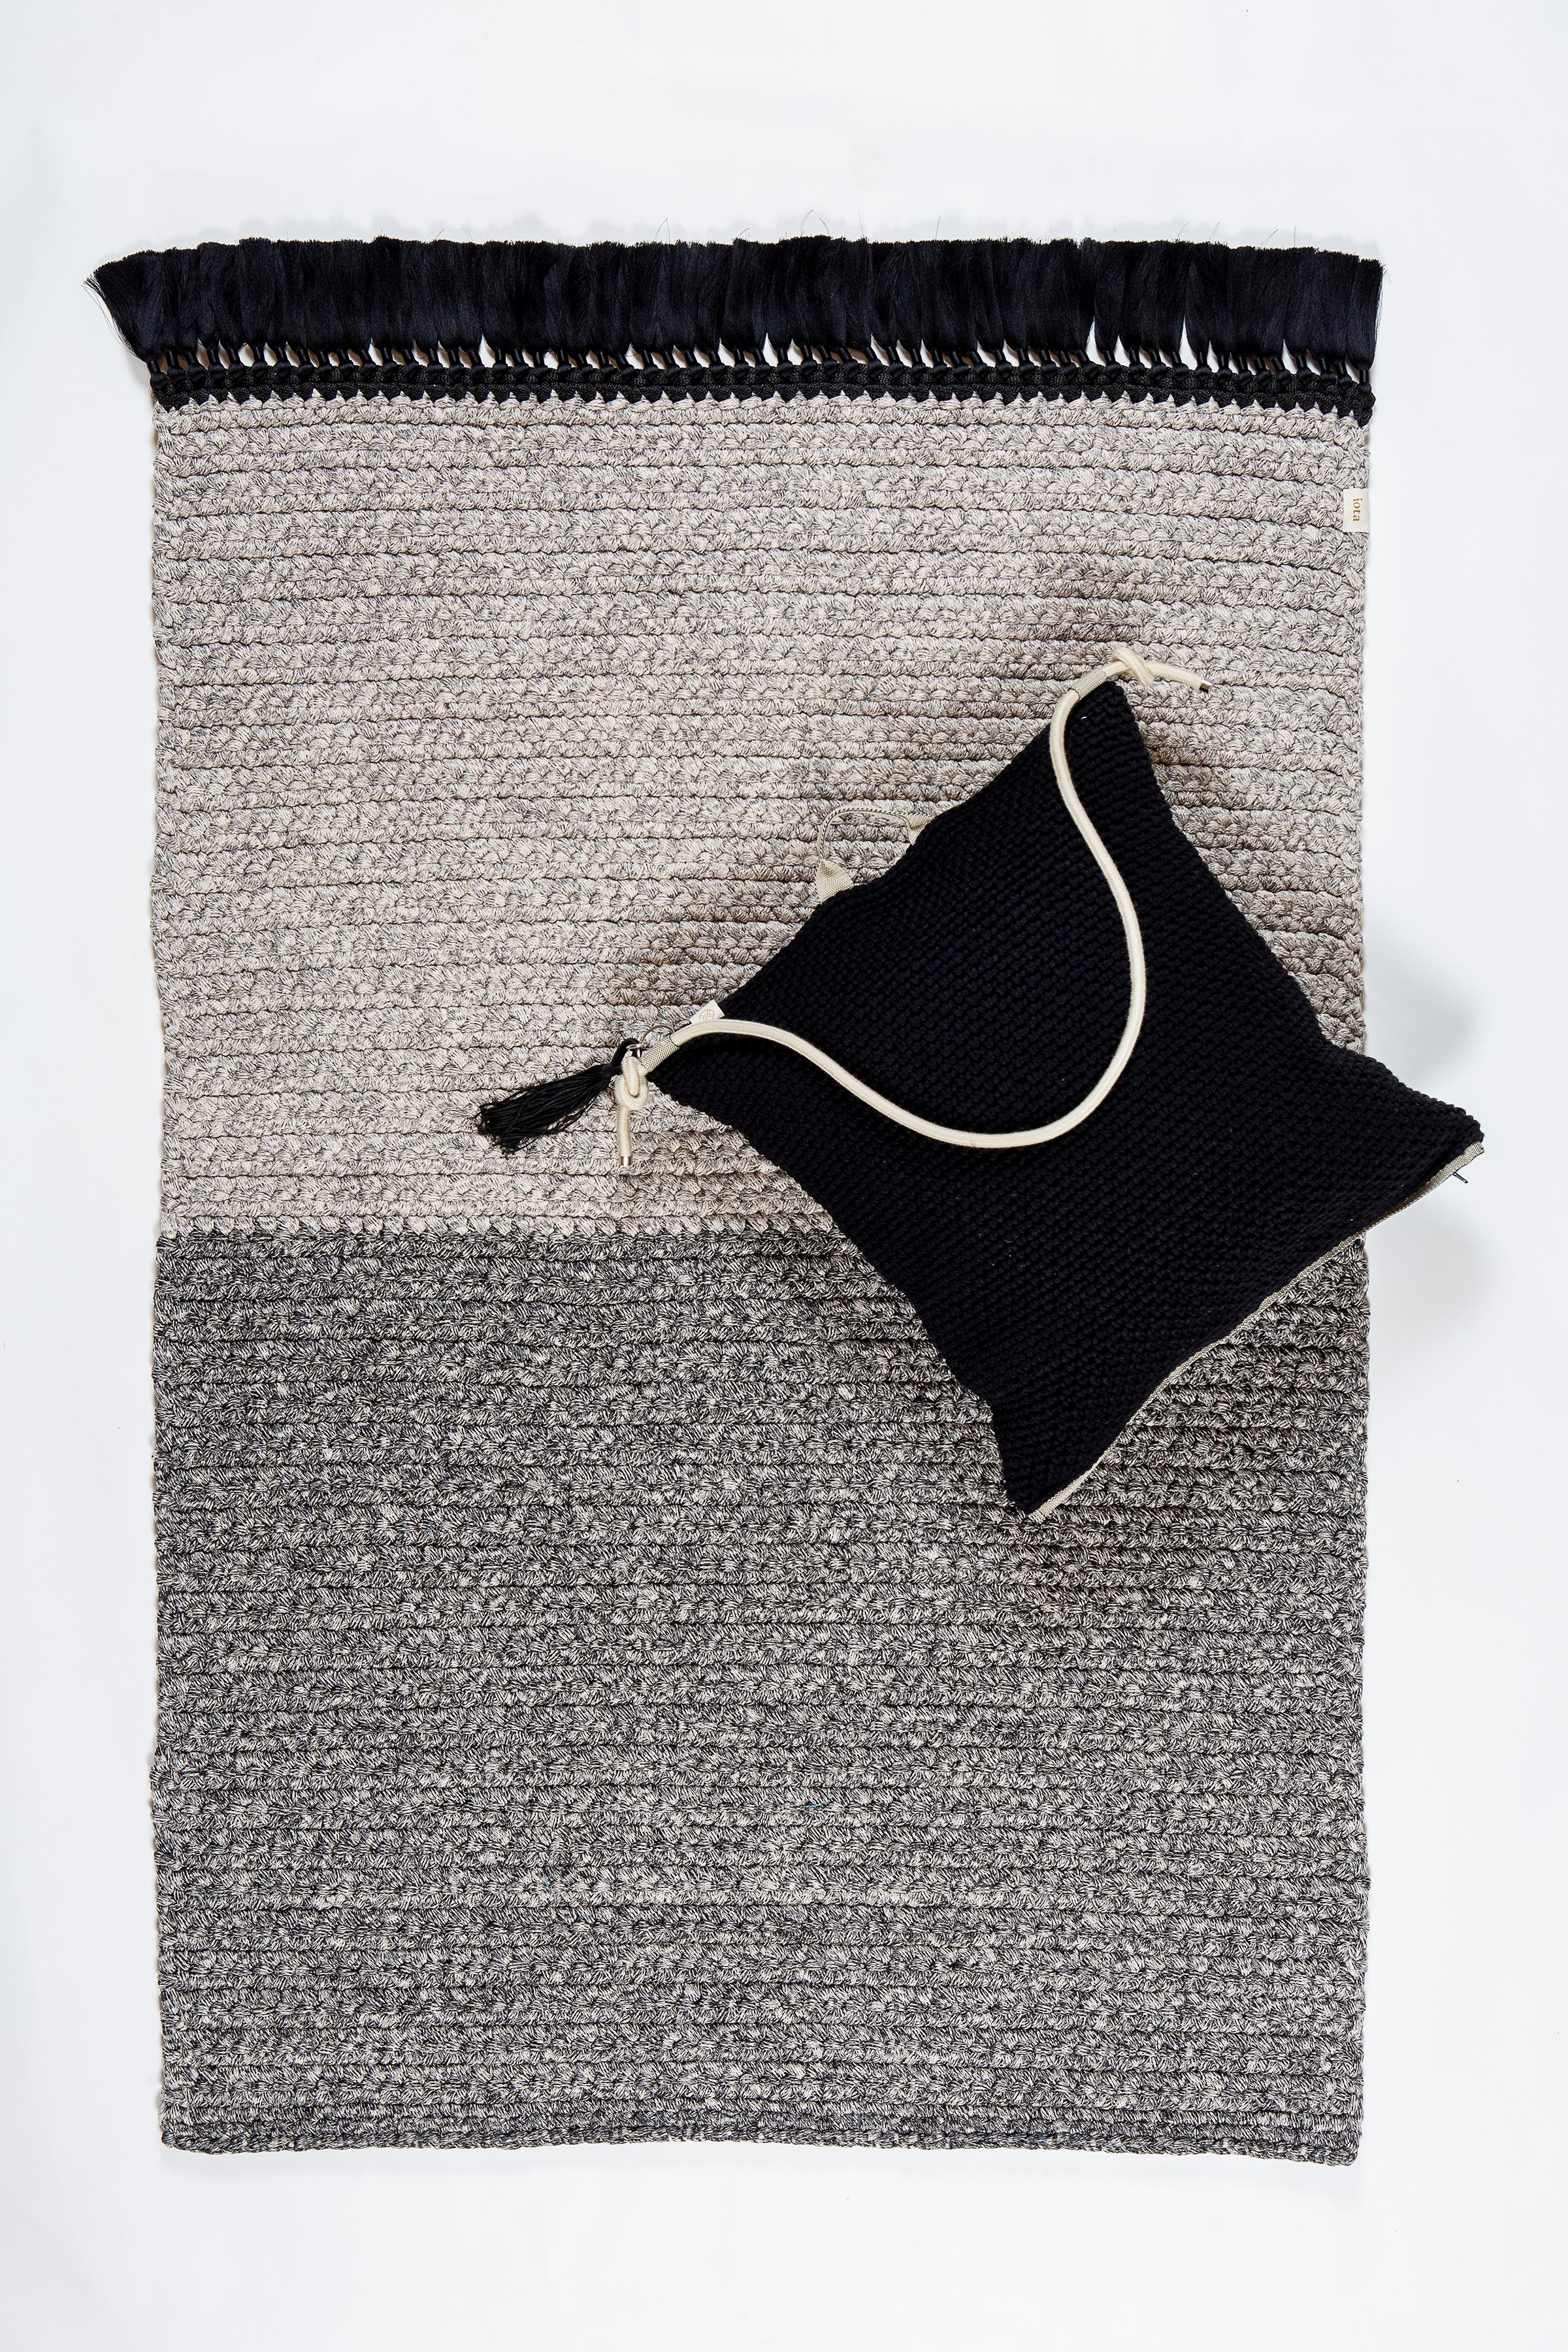 Handmade Crochet Two-Tone Rug in Black Made of iota's Bespoke Yarns 4